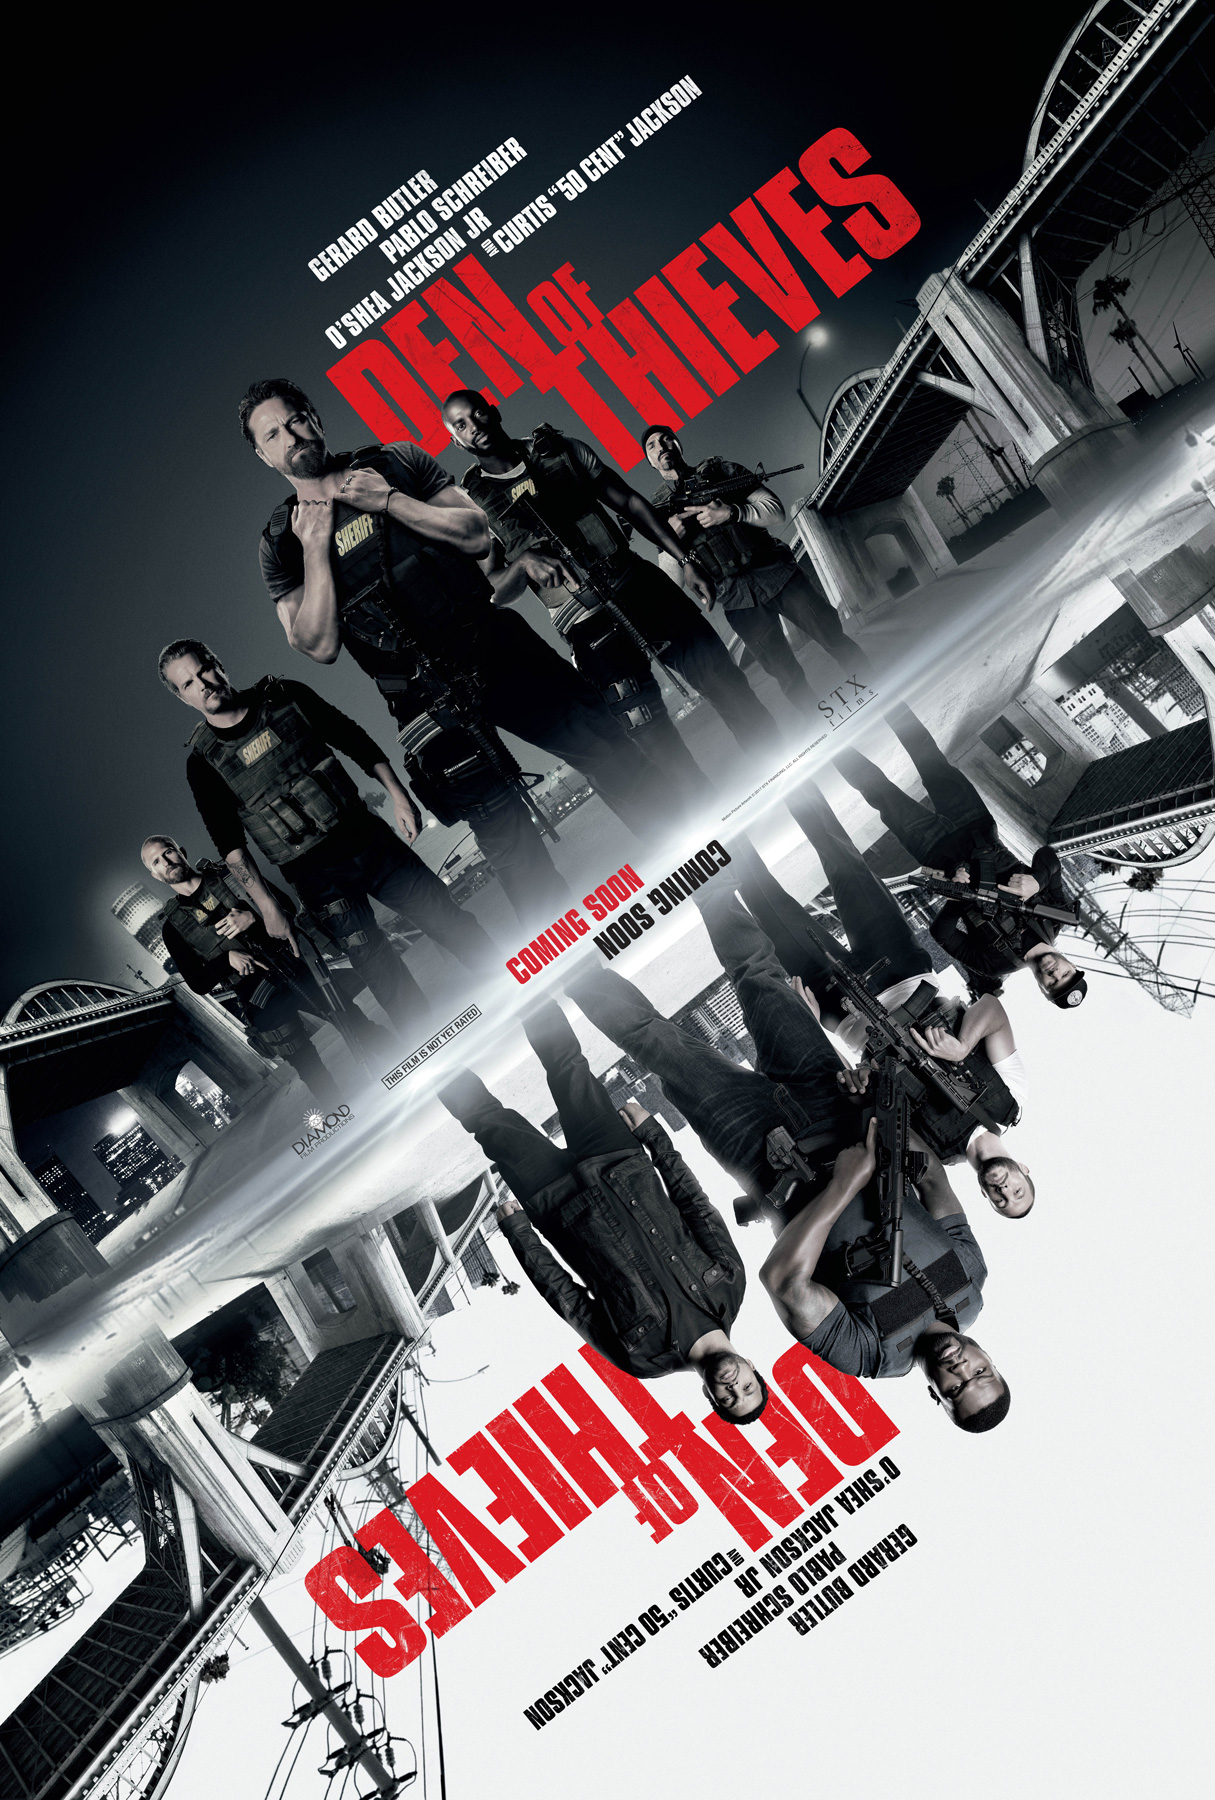 Den Of Thieves poster (STX Films/STX Entertainment)